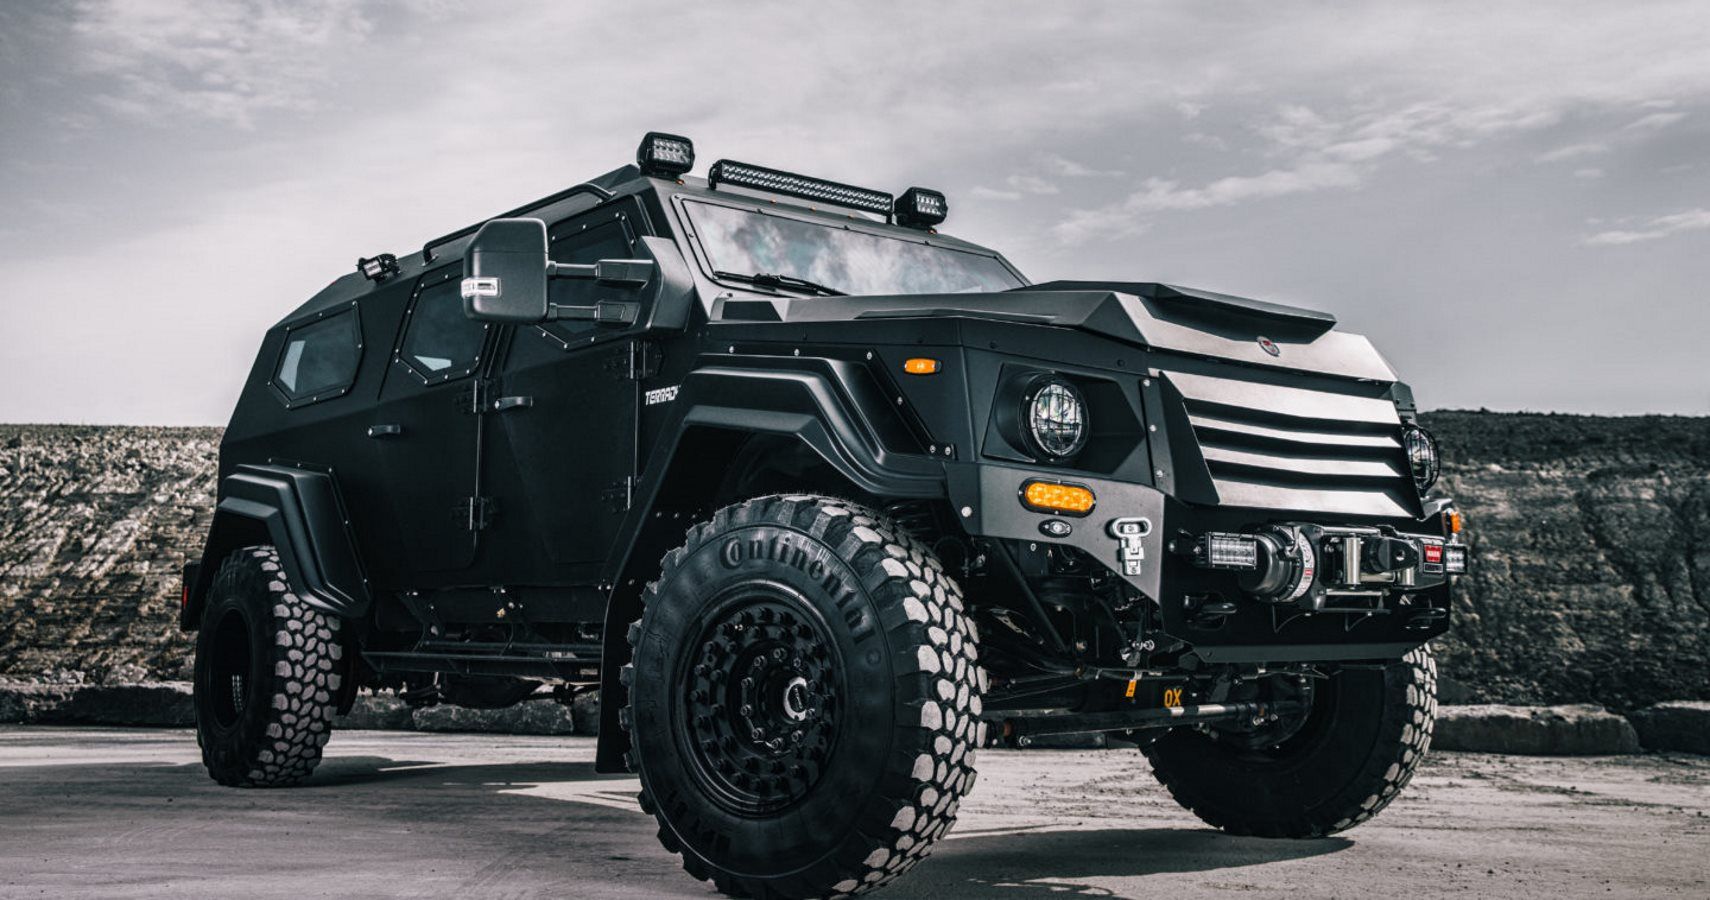 Terradyne Gurkha: The Massive Armored Car For Civilians